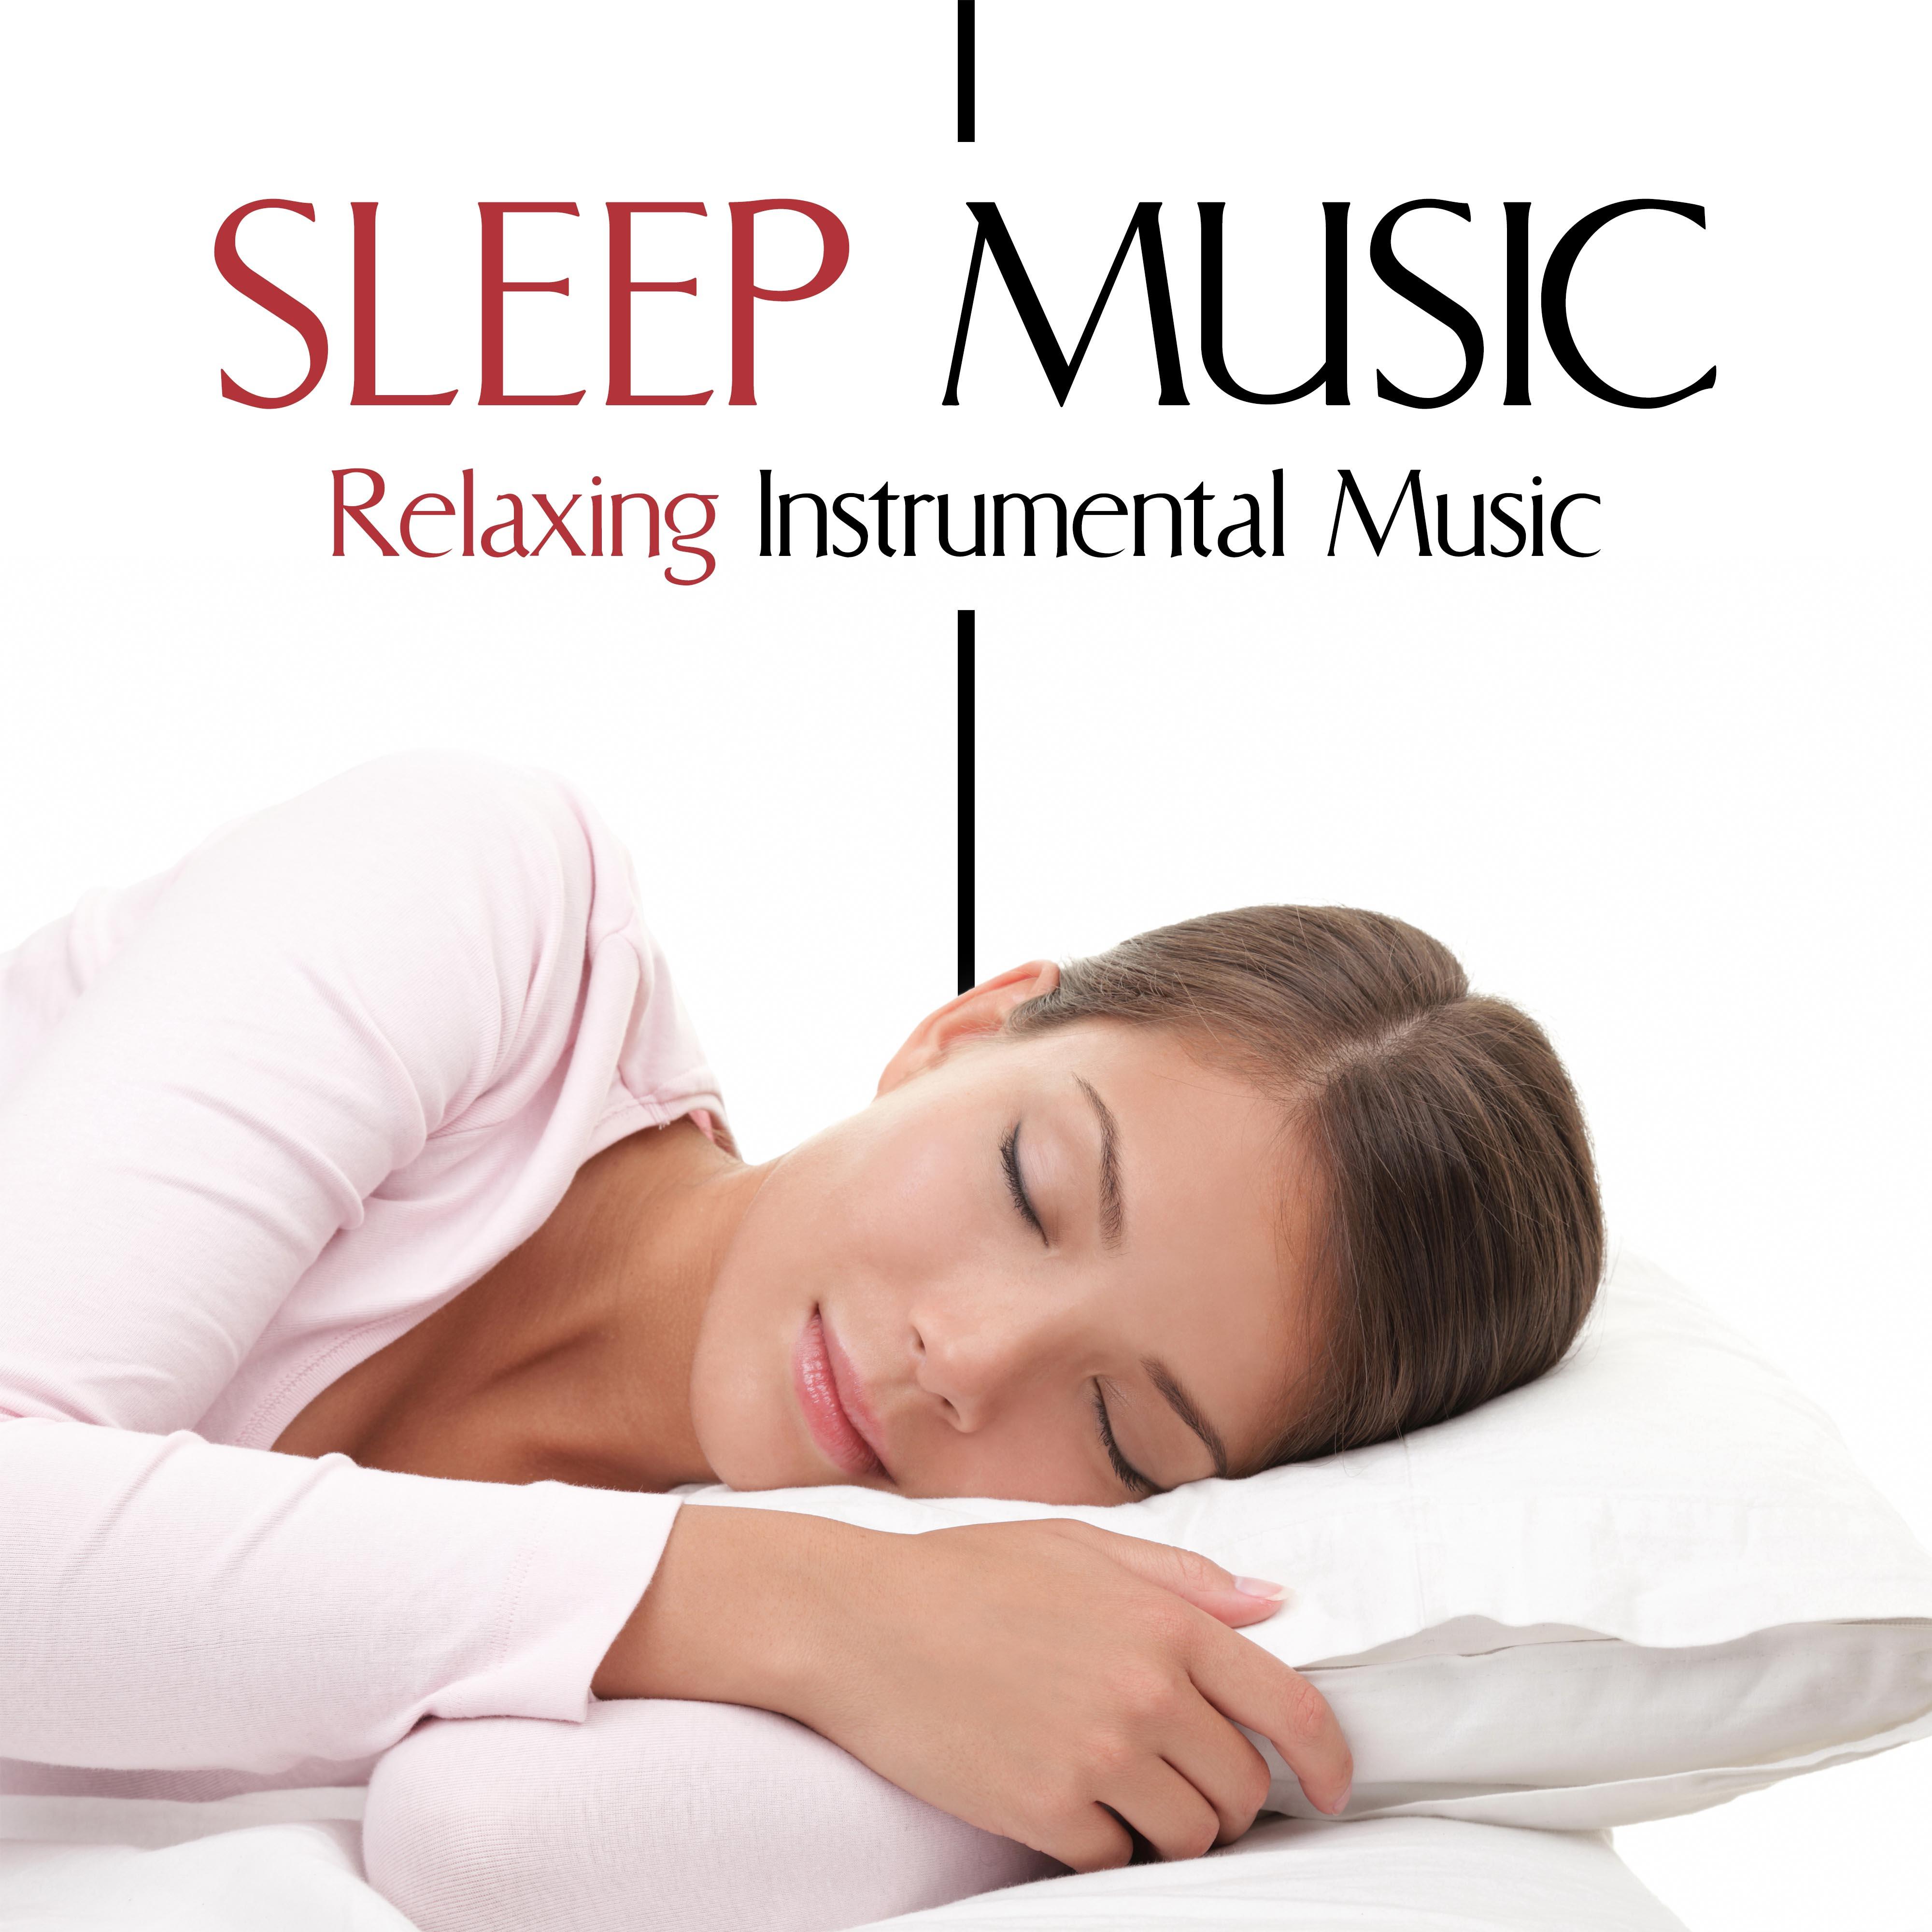 Sleep Music - Relaxing Instrumental Music for Sweet Dreams